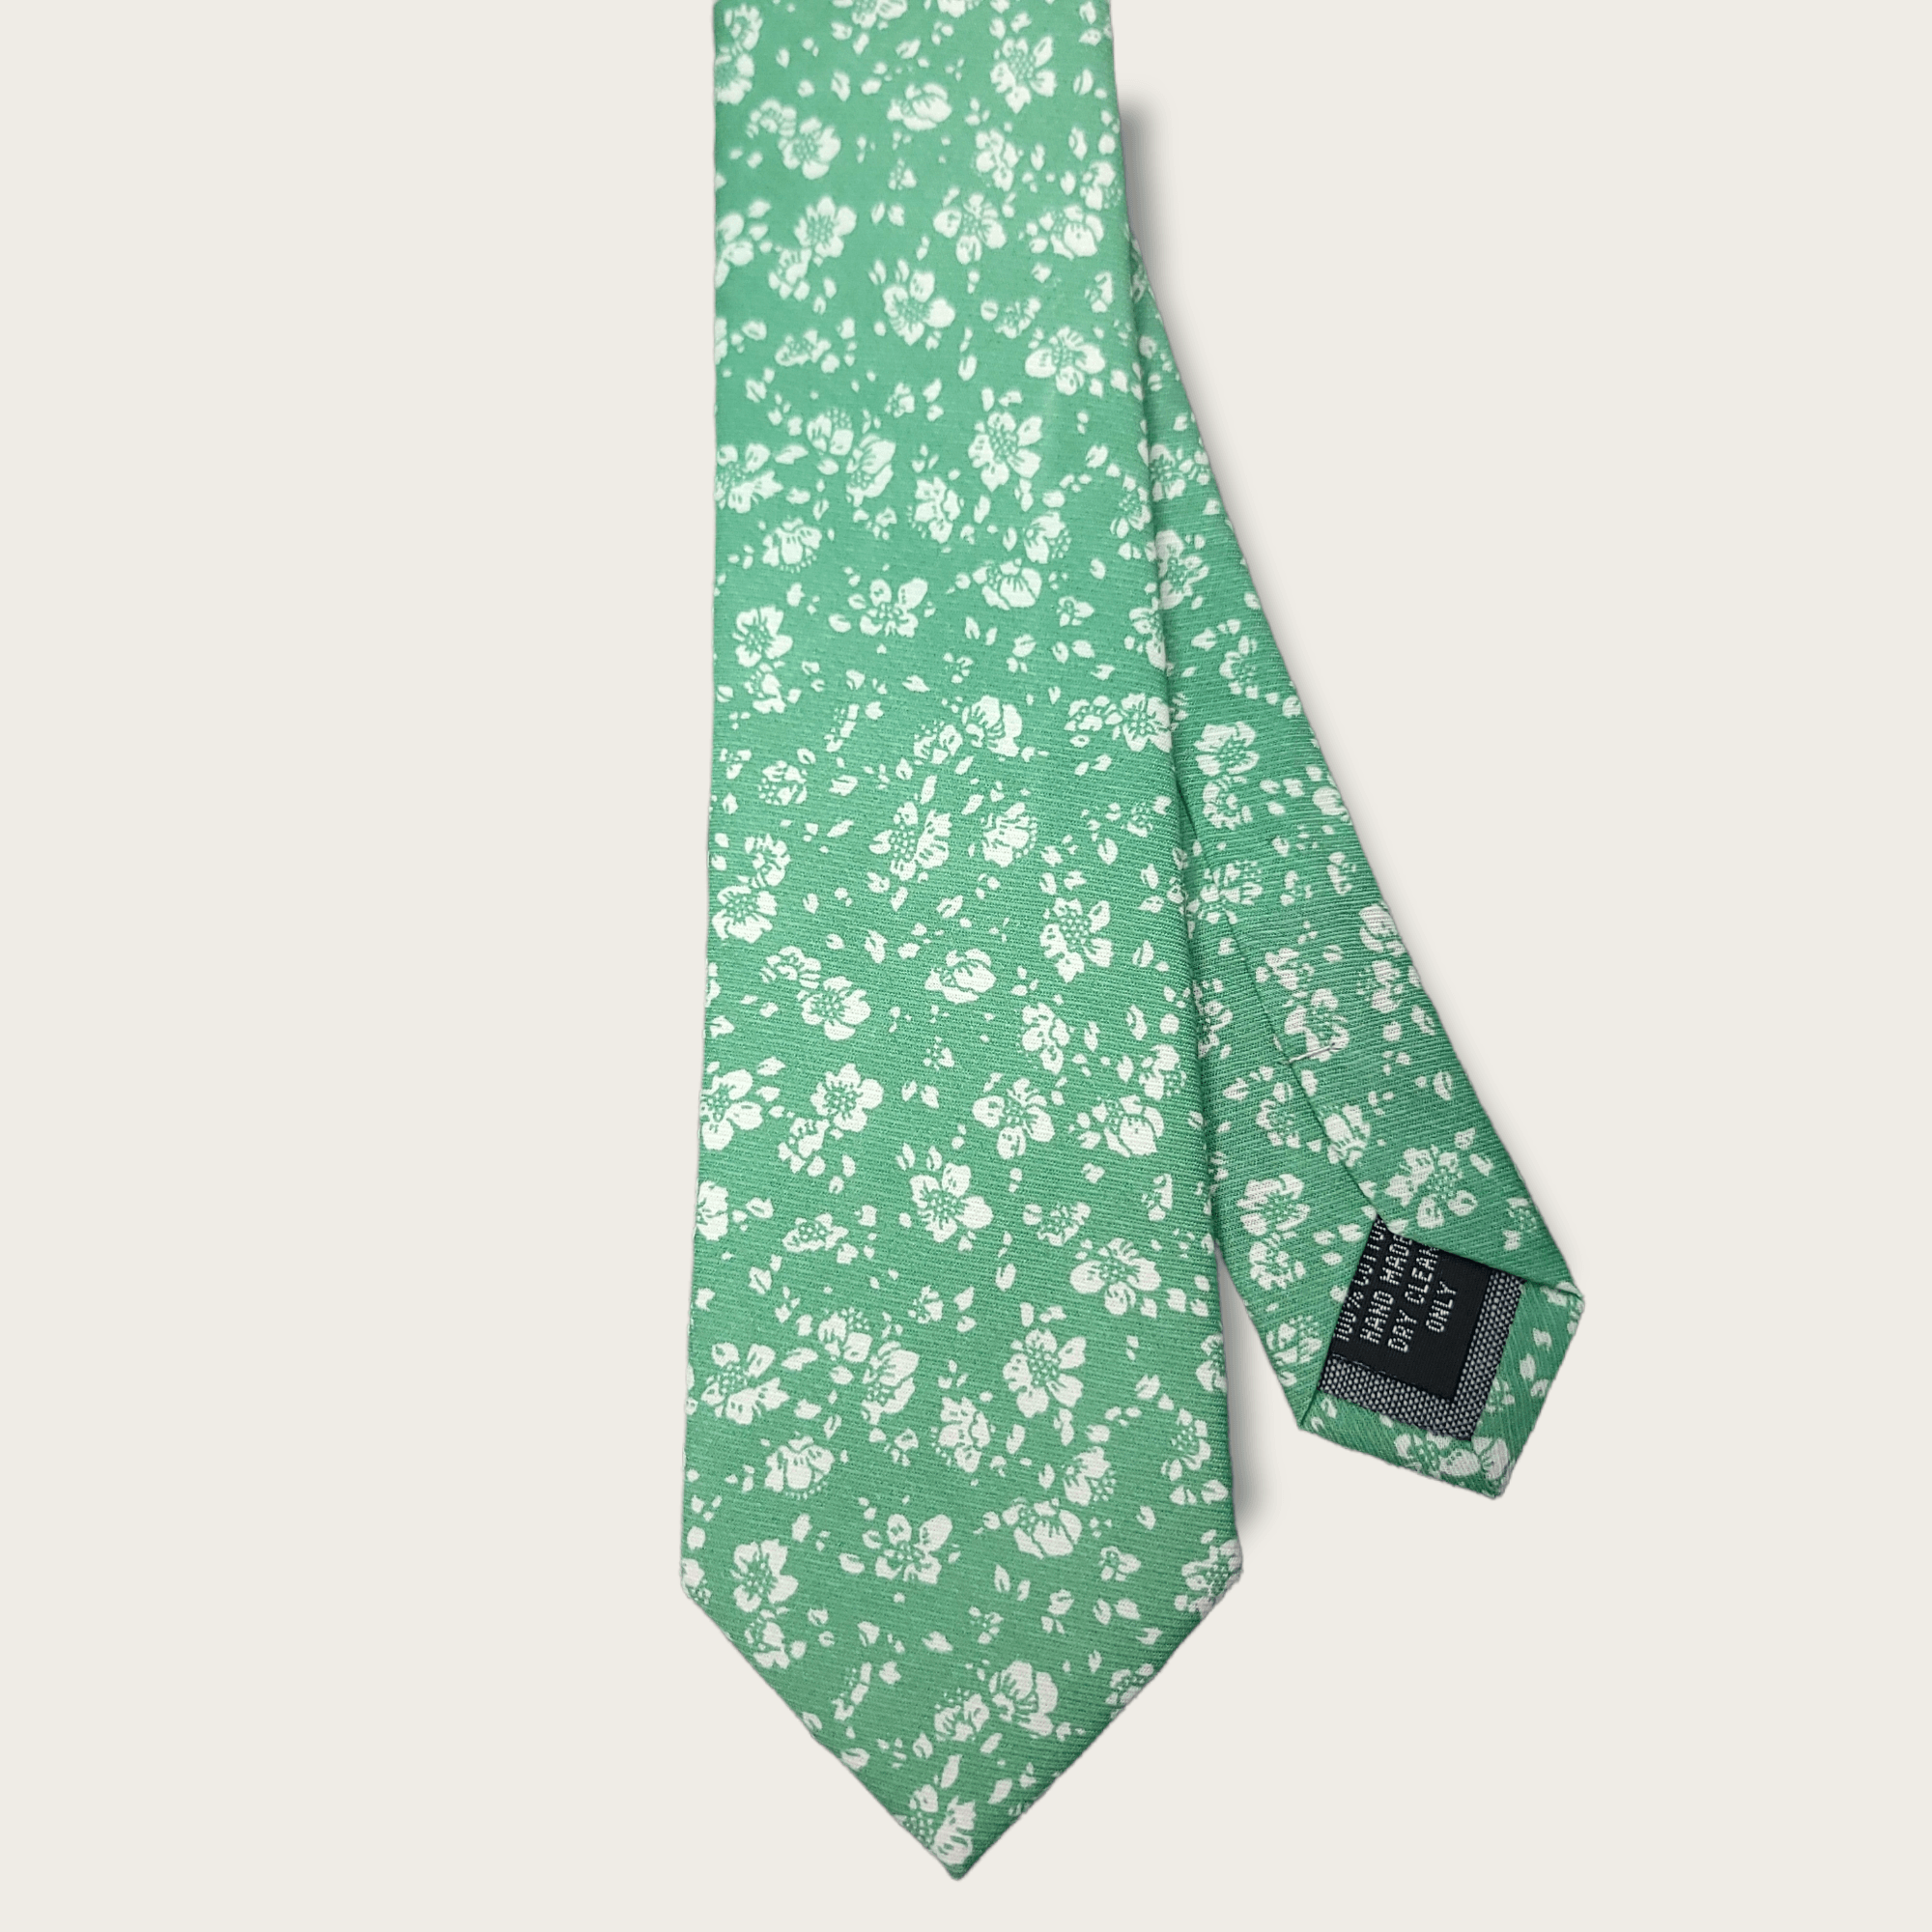 Mint Green Floral Tie - STYLETIE